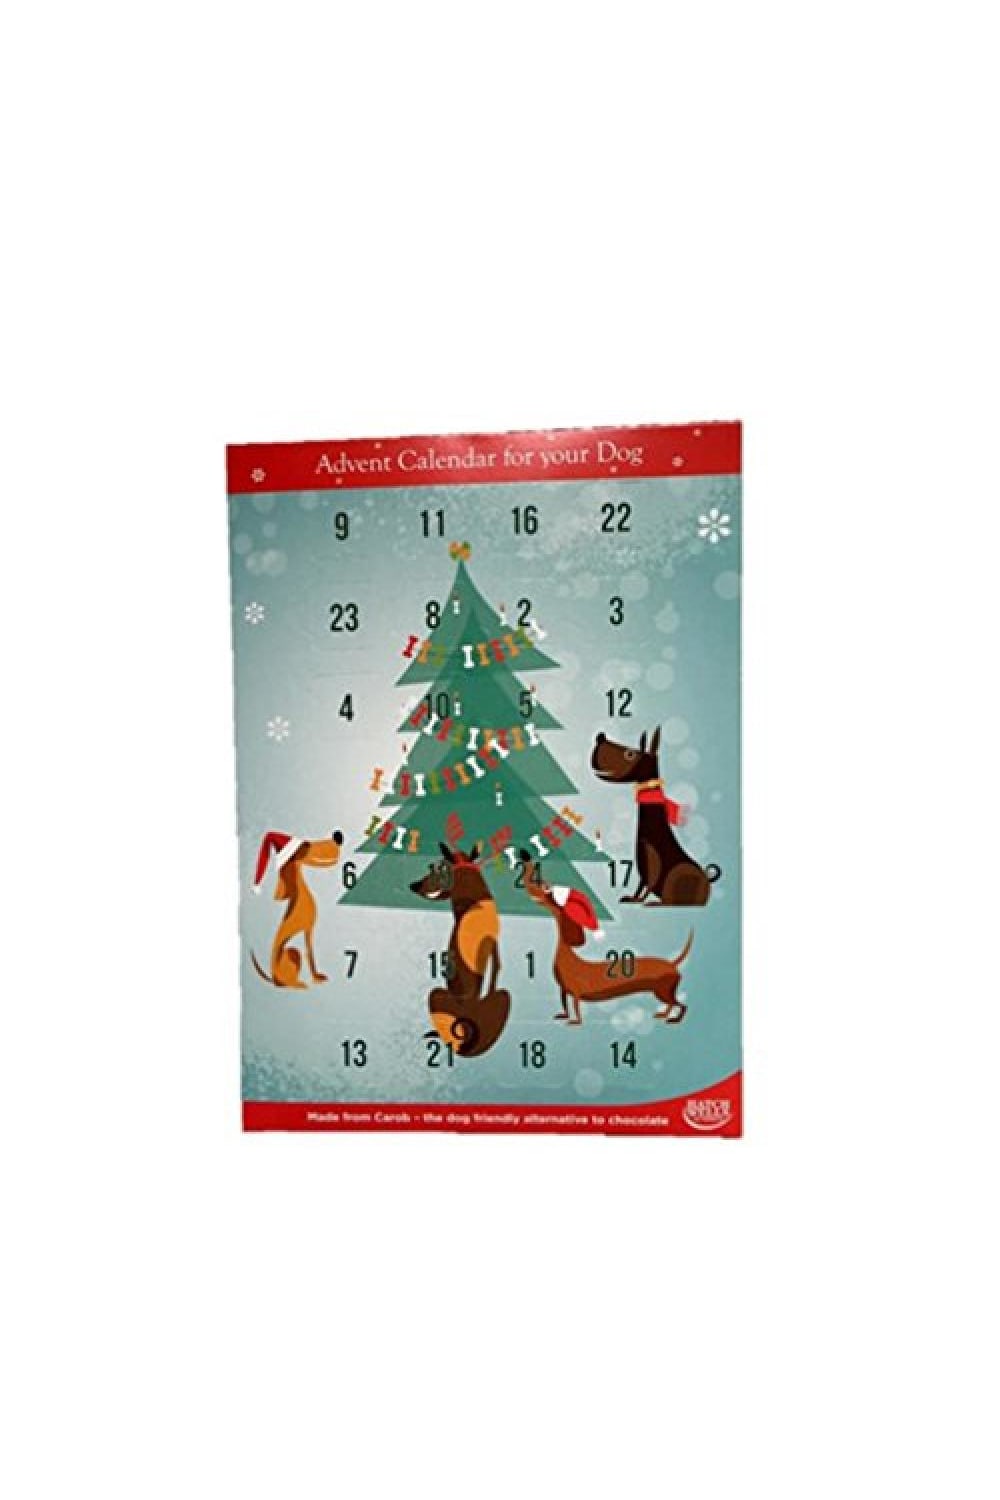 Hatchwells Dog Advent Calendar